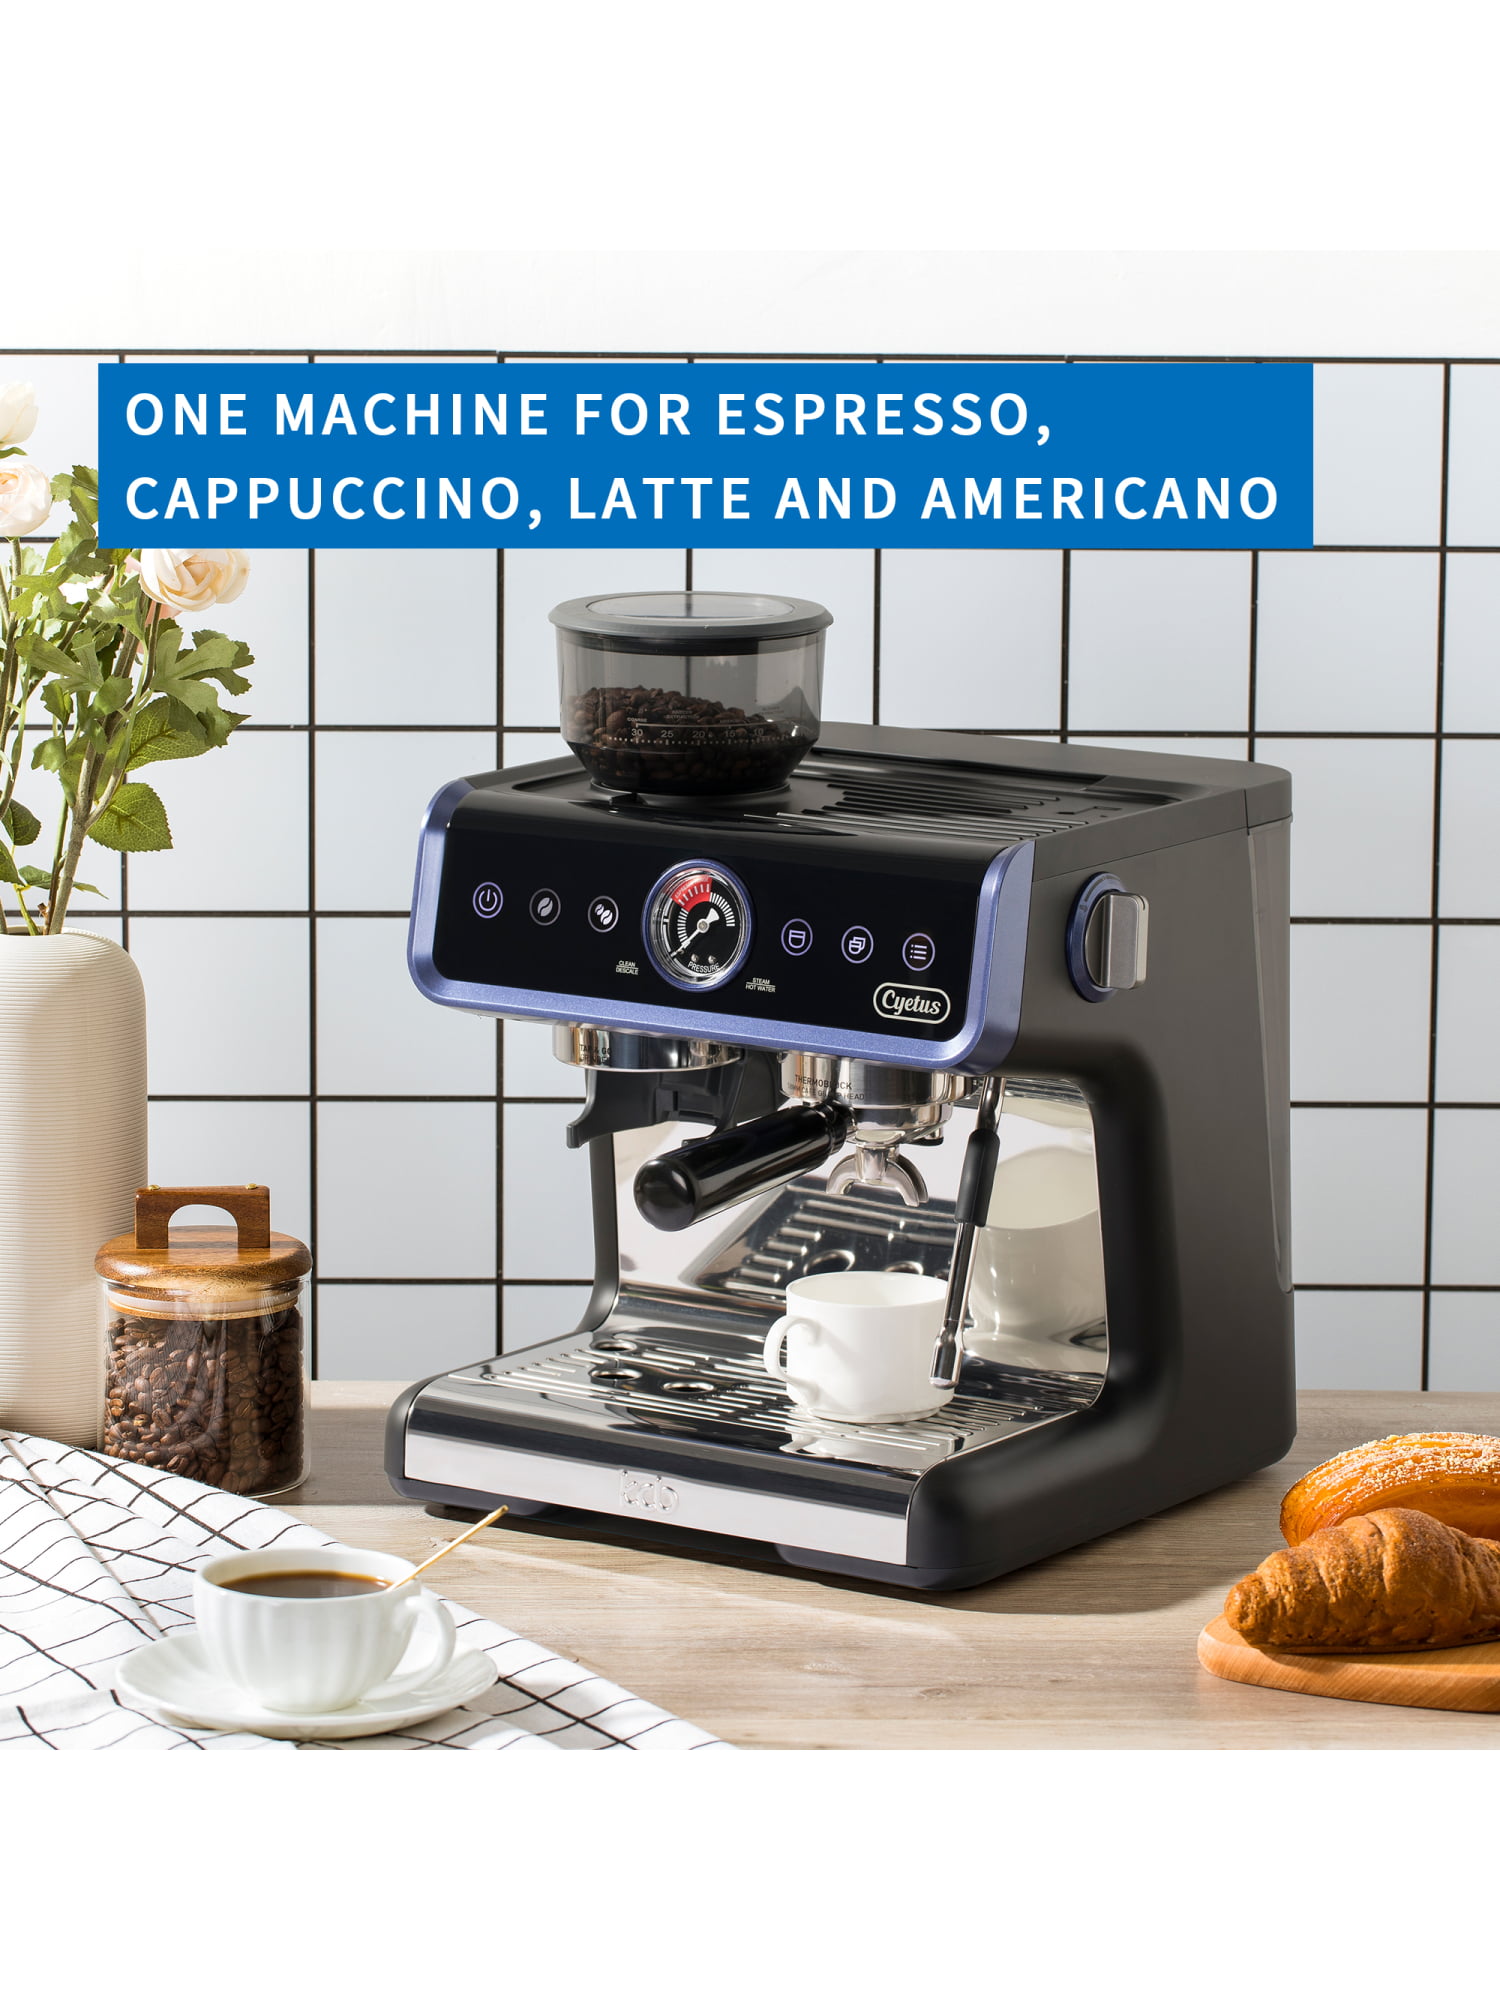 Latte – Cappuccino Steam Wand Maintenance